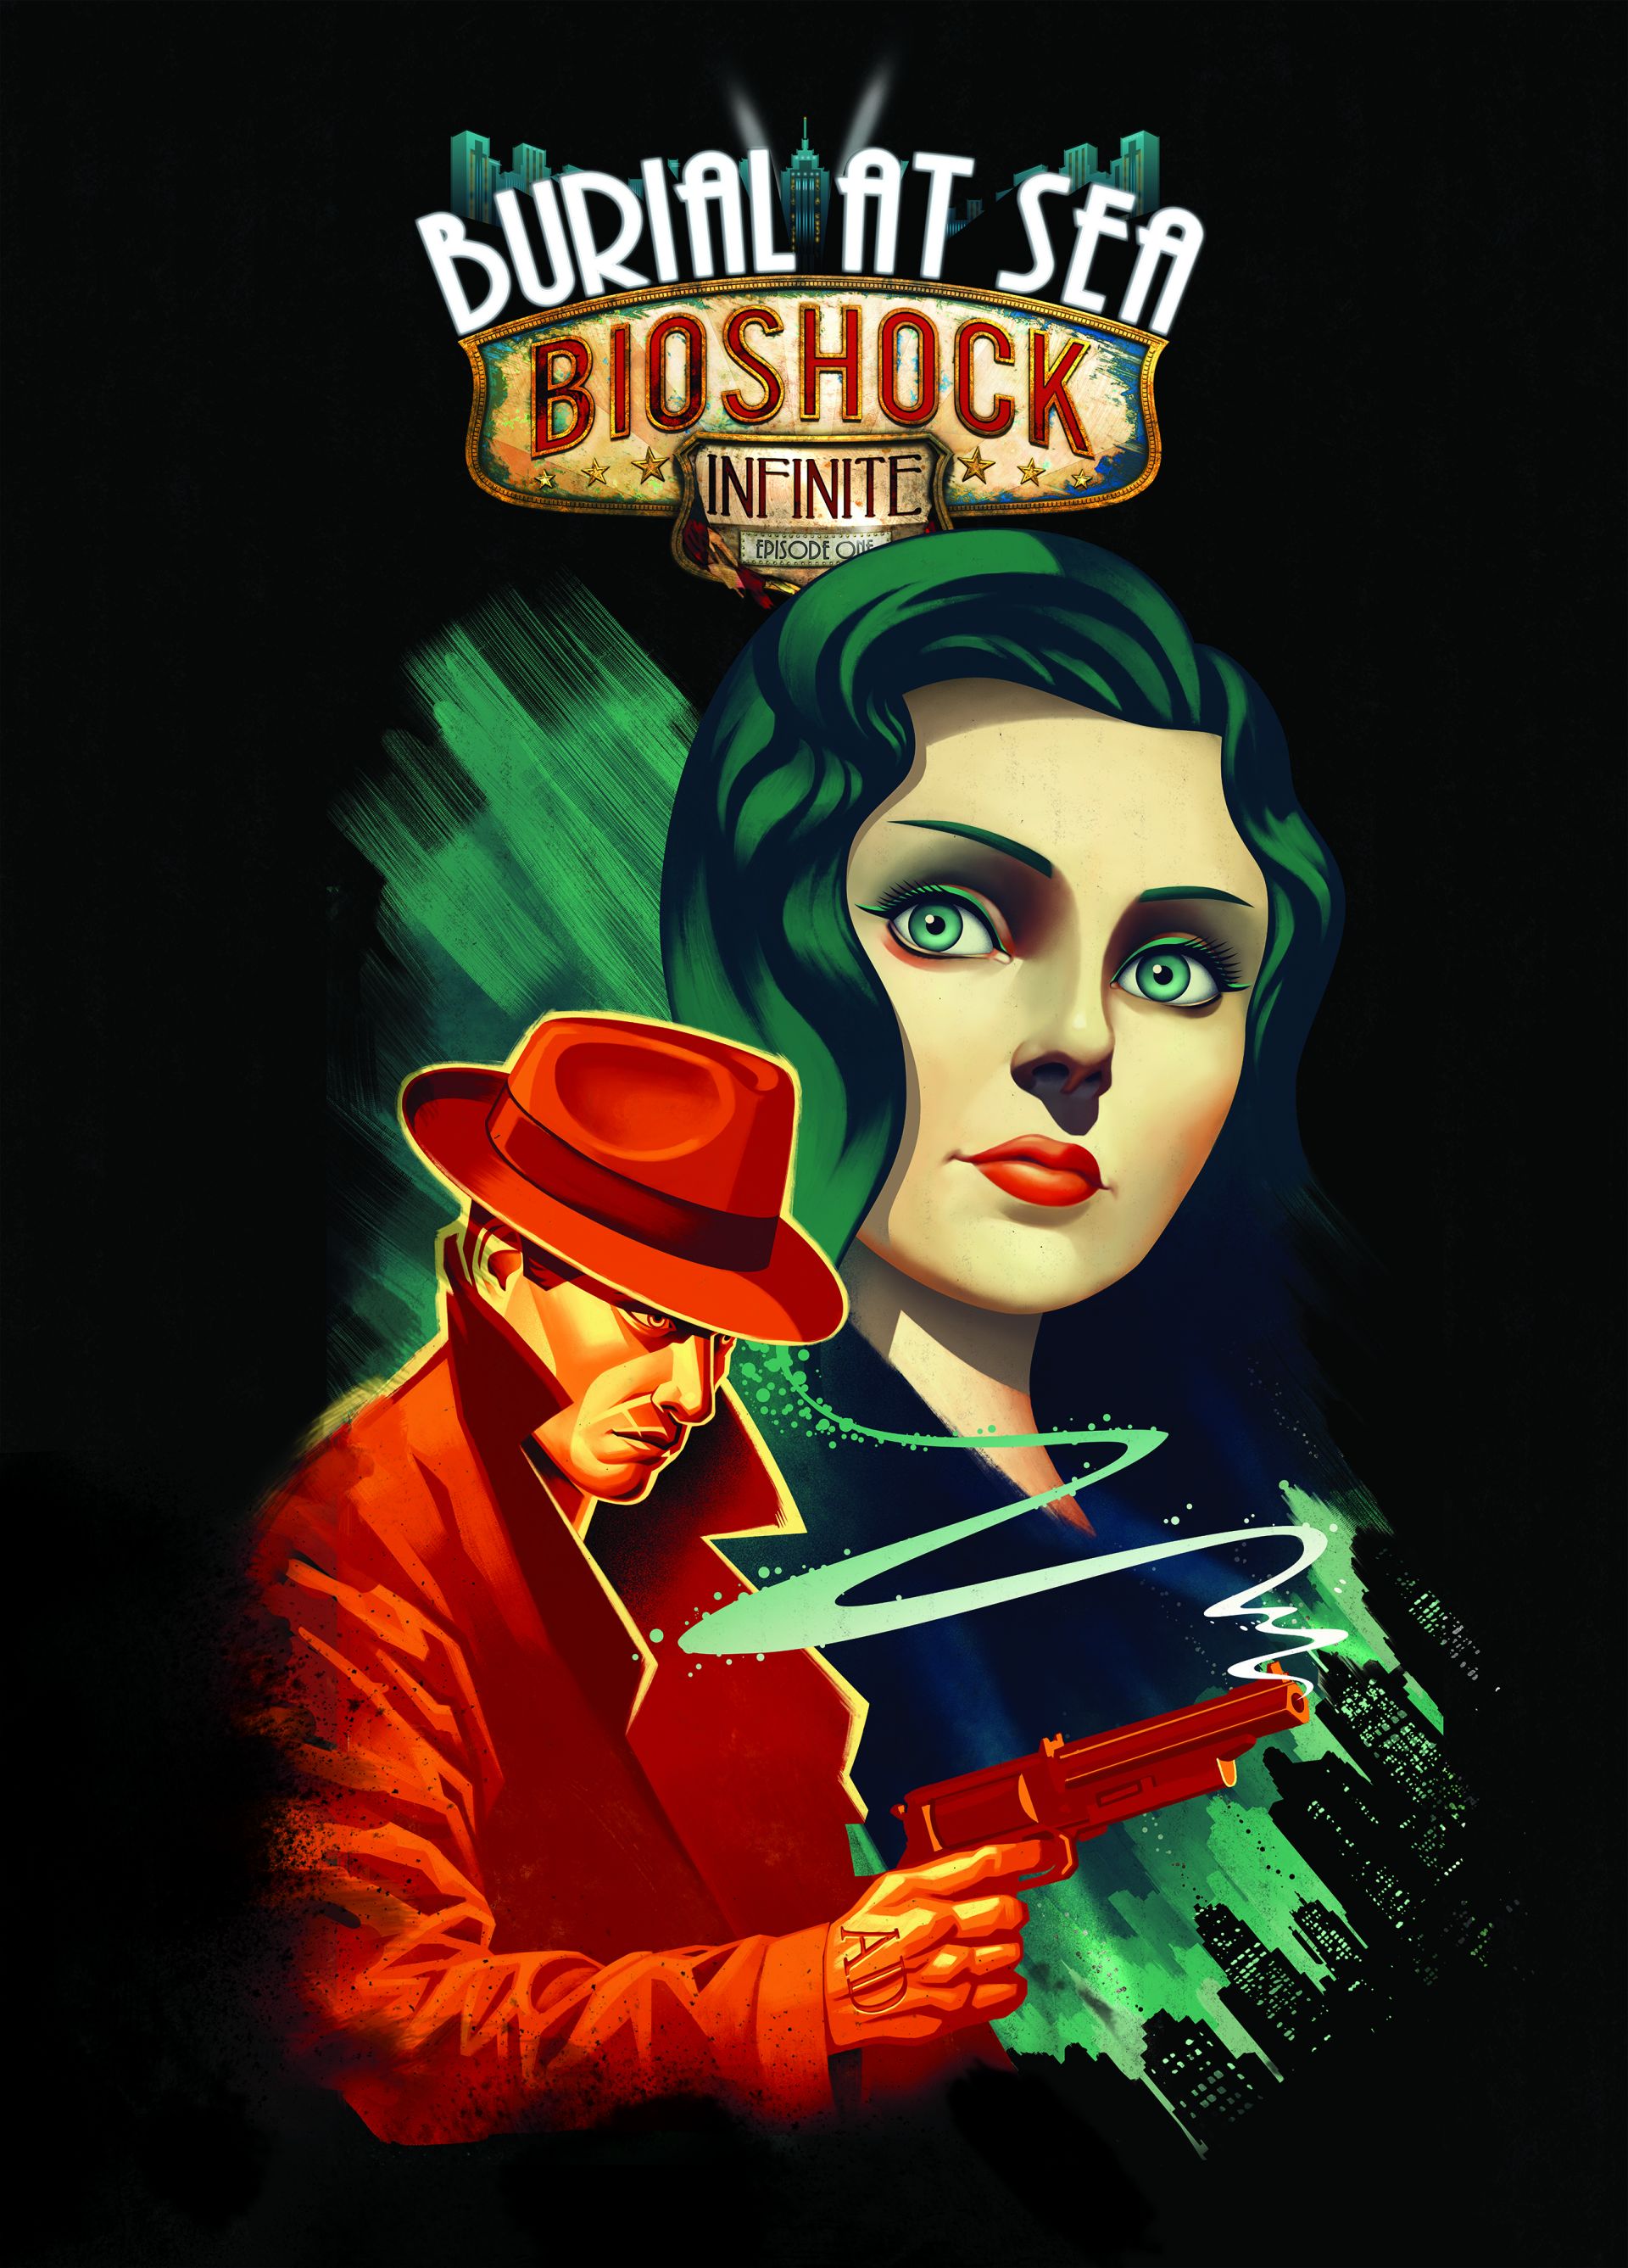 For Bioshock Infinite DLC, prepare to be enraptured